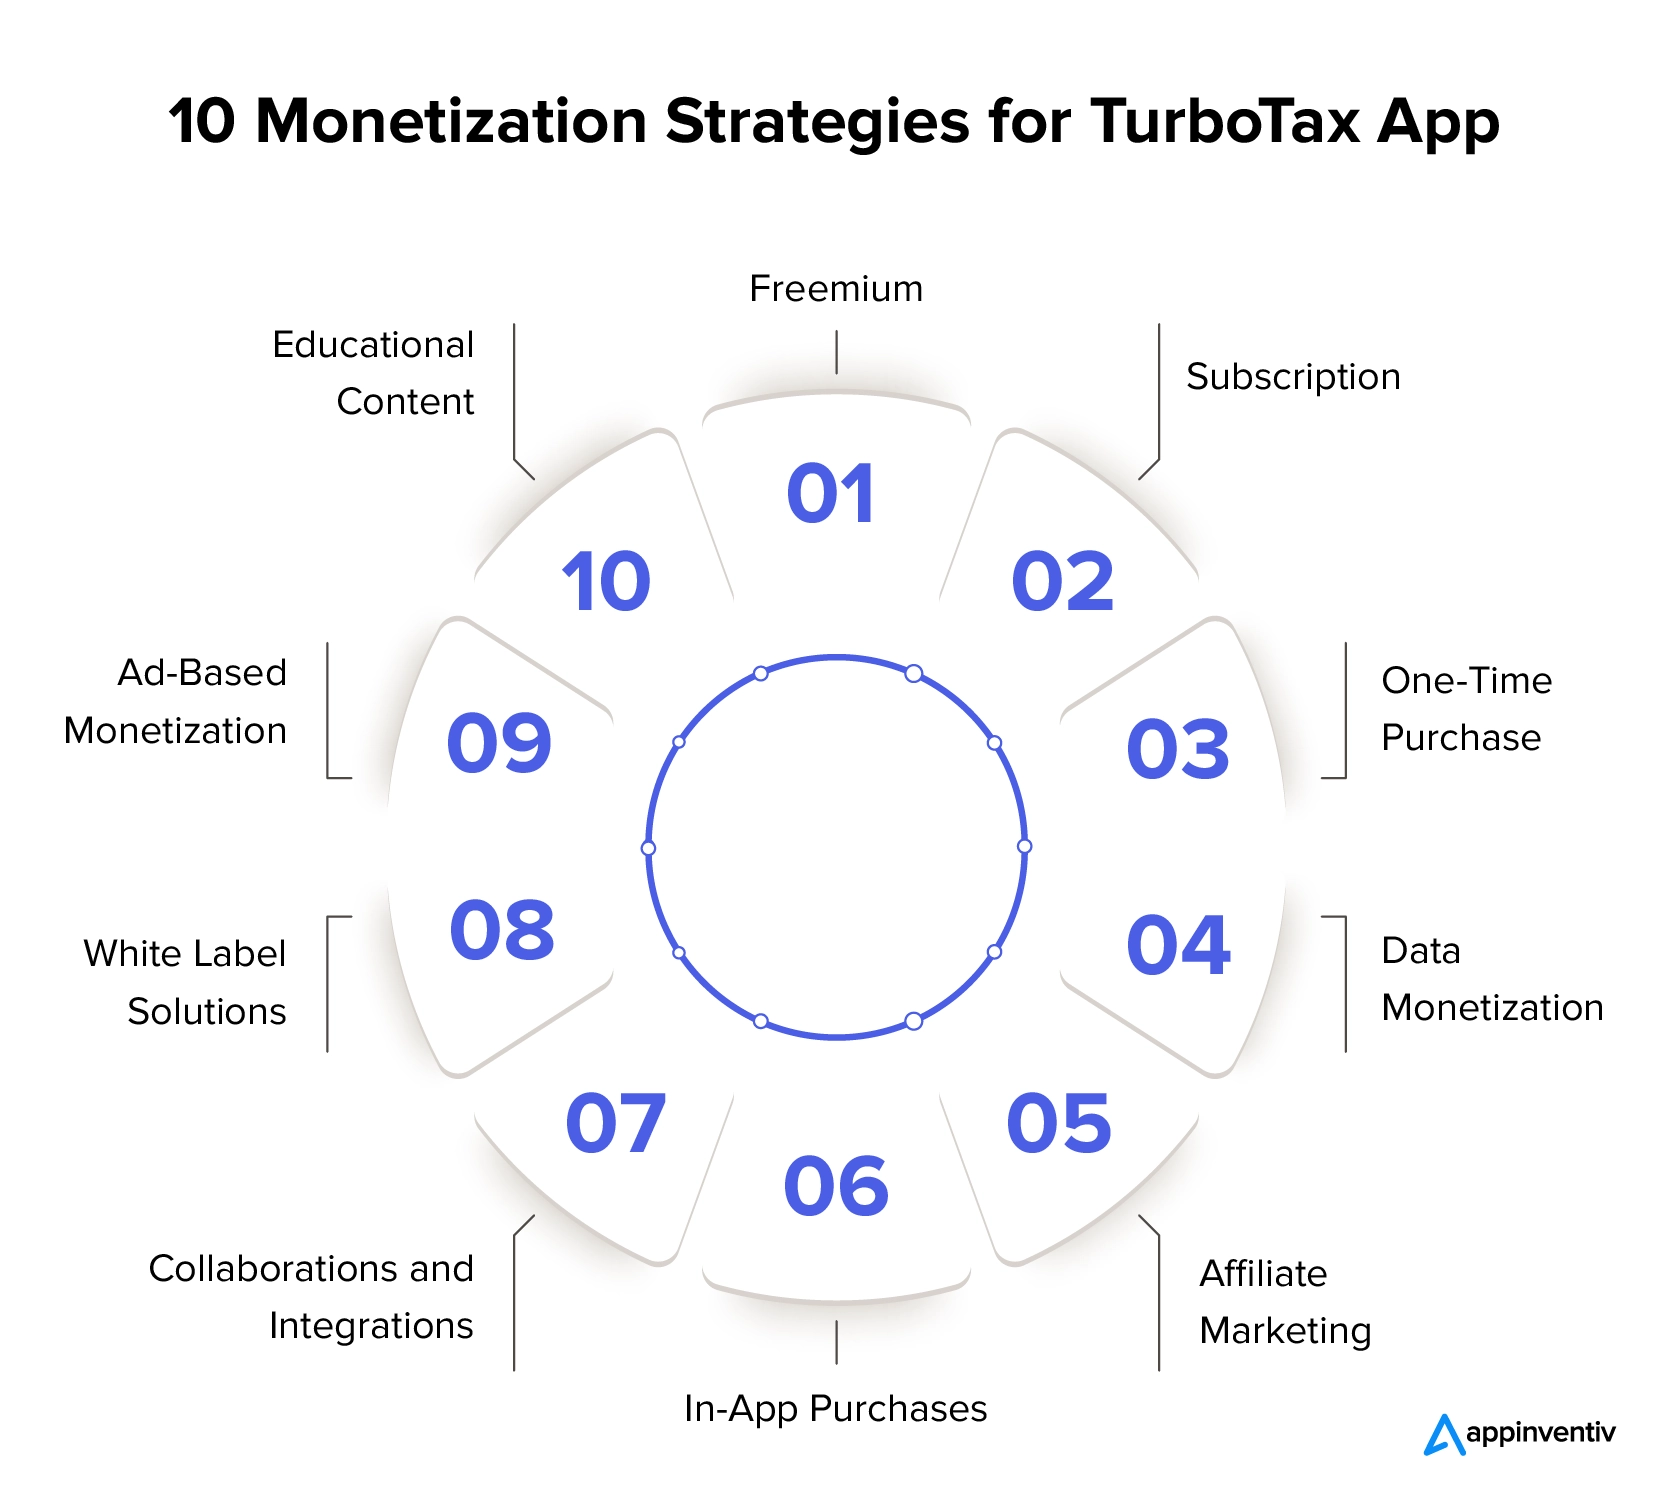 Key Monetization Strategies for TurboTax App